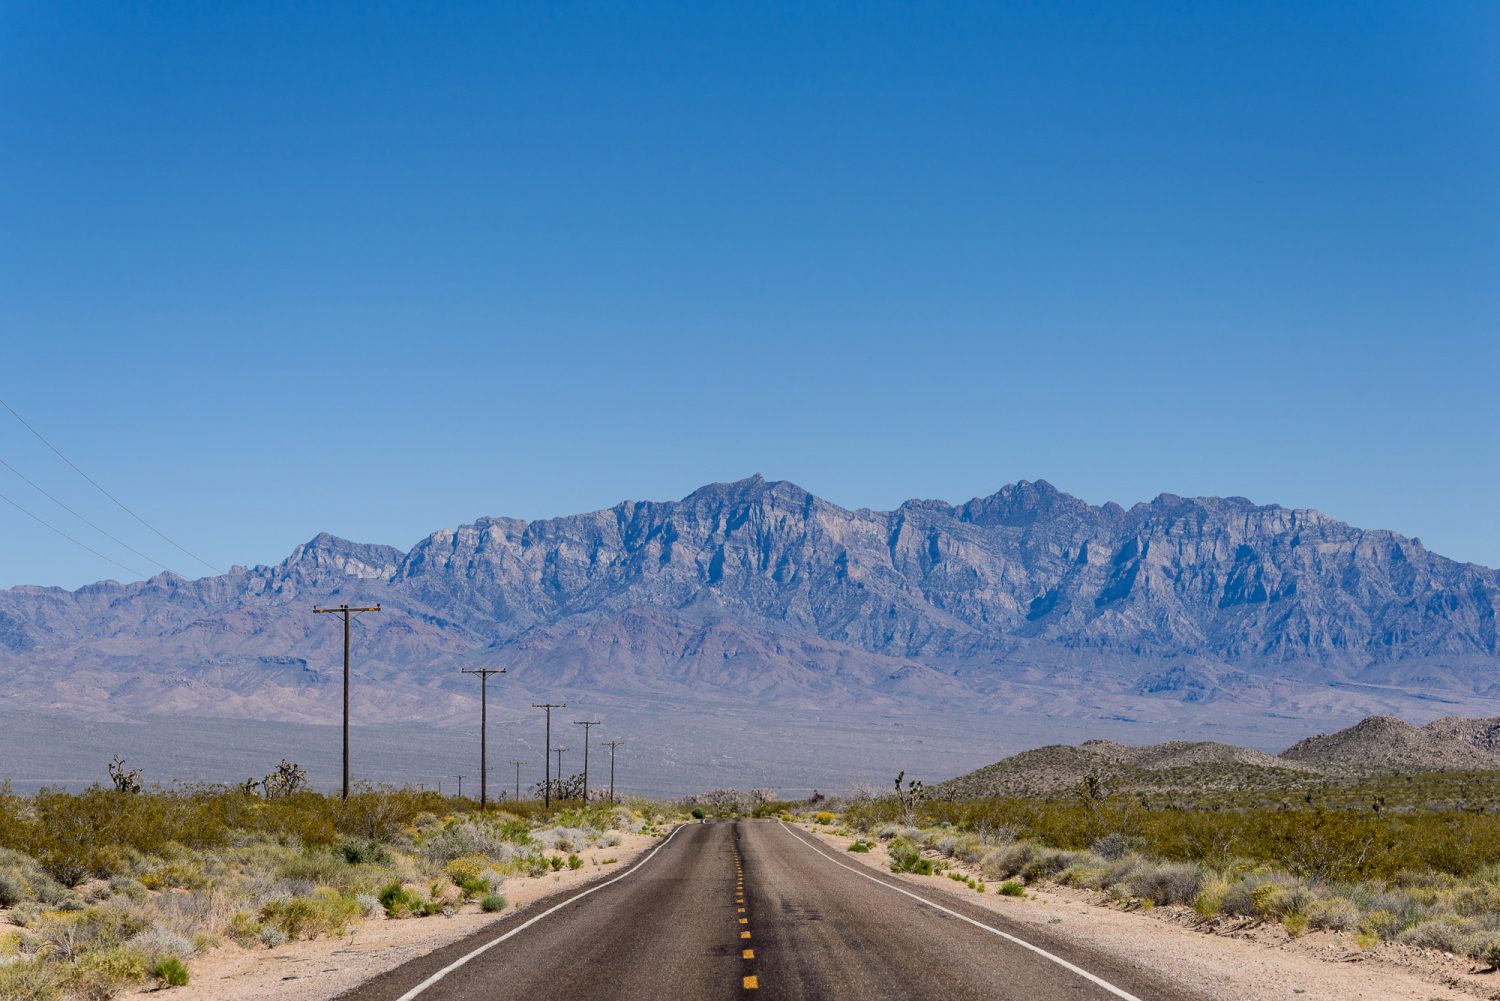 Desolate road in the Mojave Desert